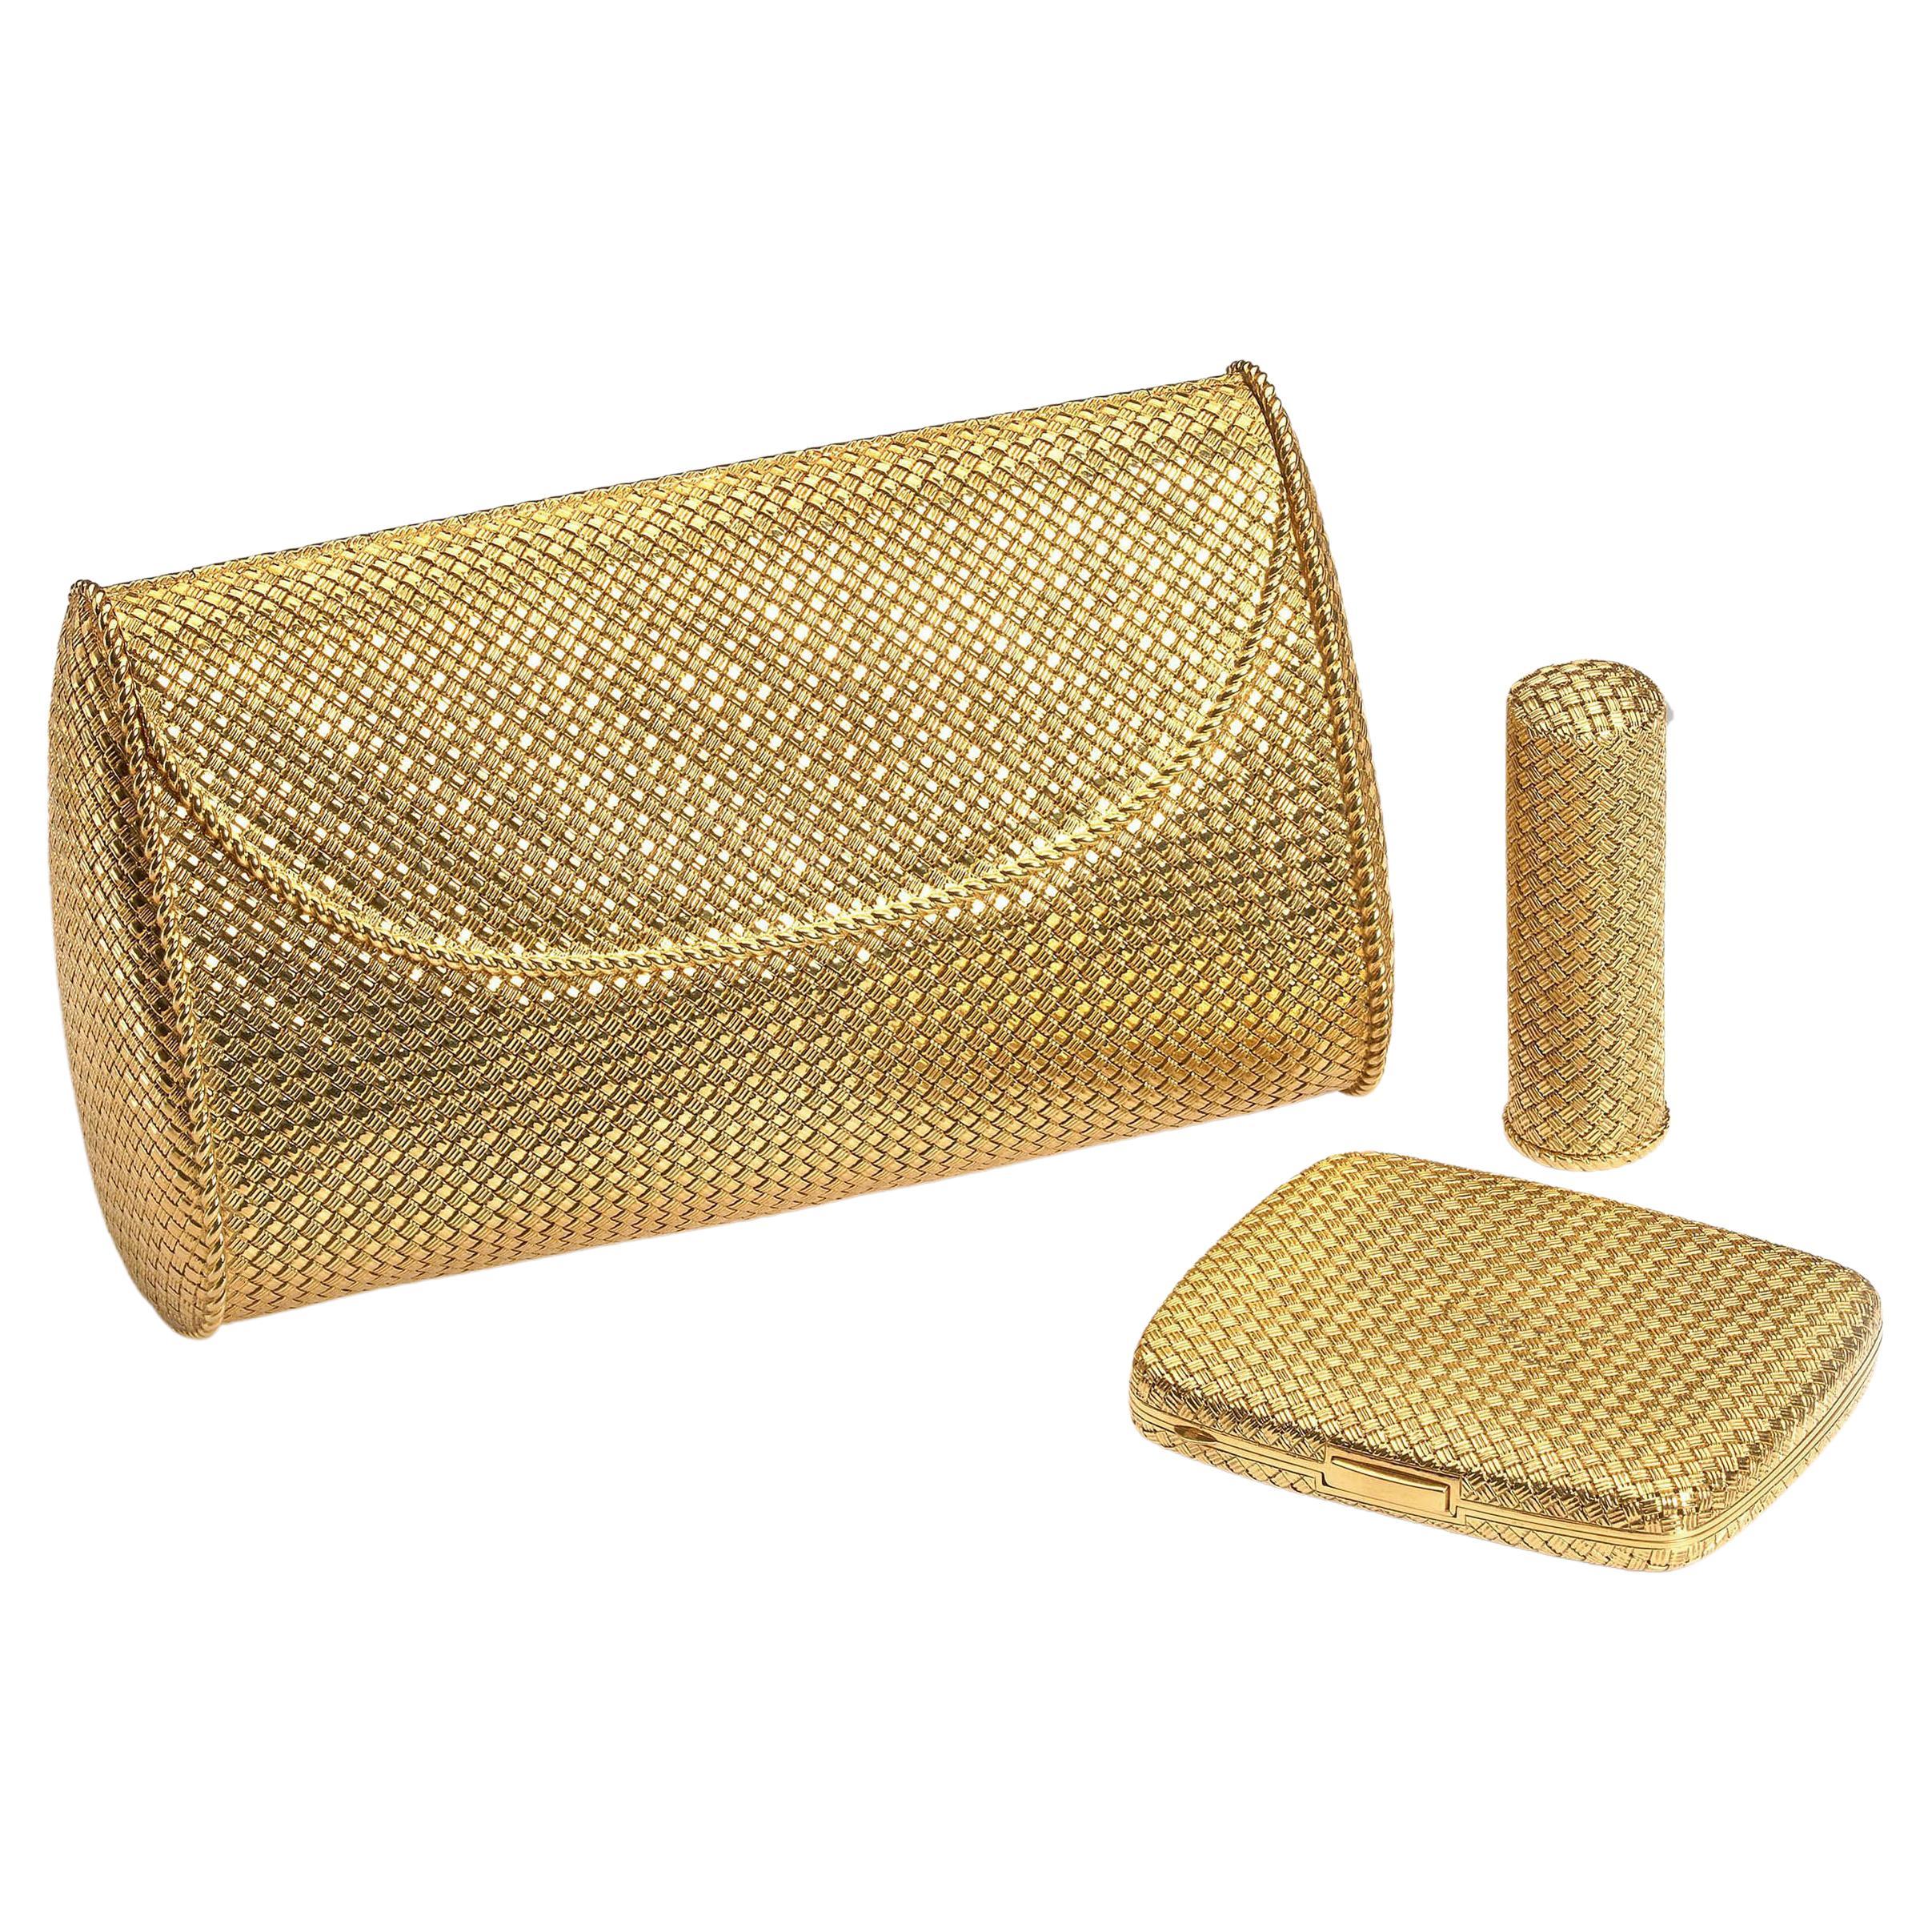 Vintage 18 Karat Gold Evening Suite of Bag, Compact Mirror and Lipstick Holder